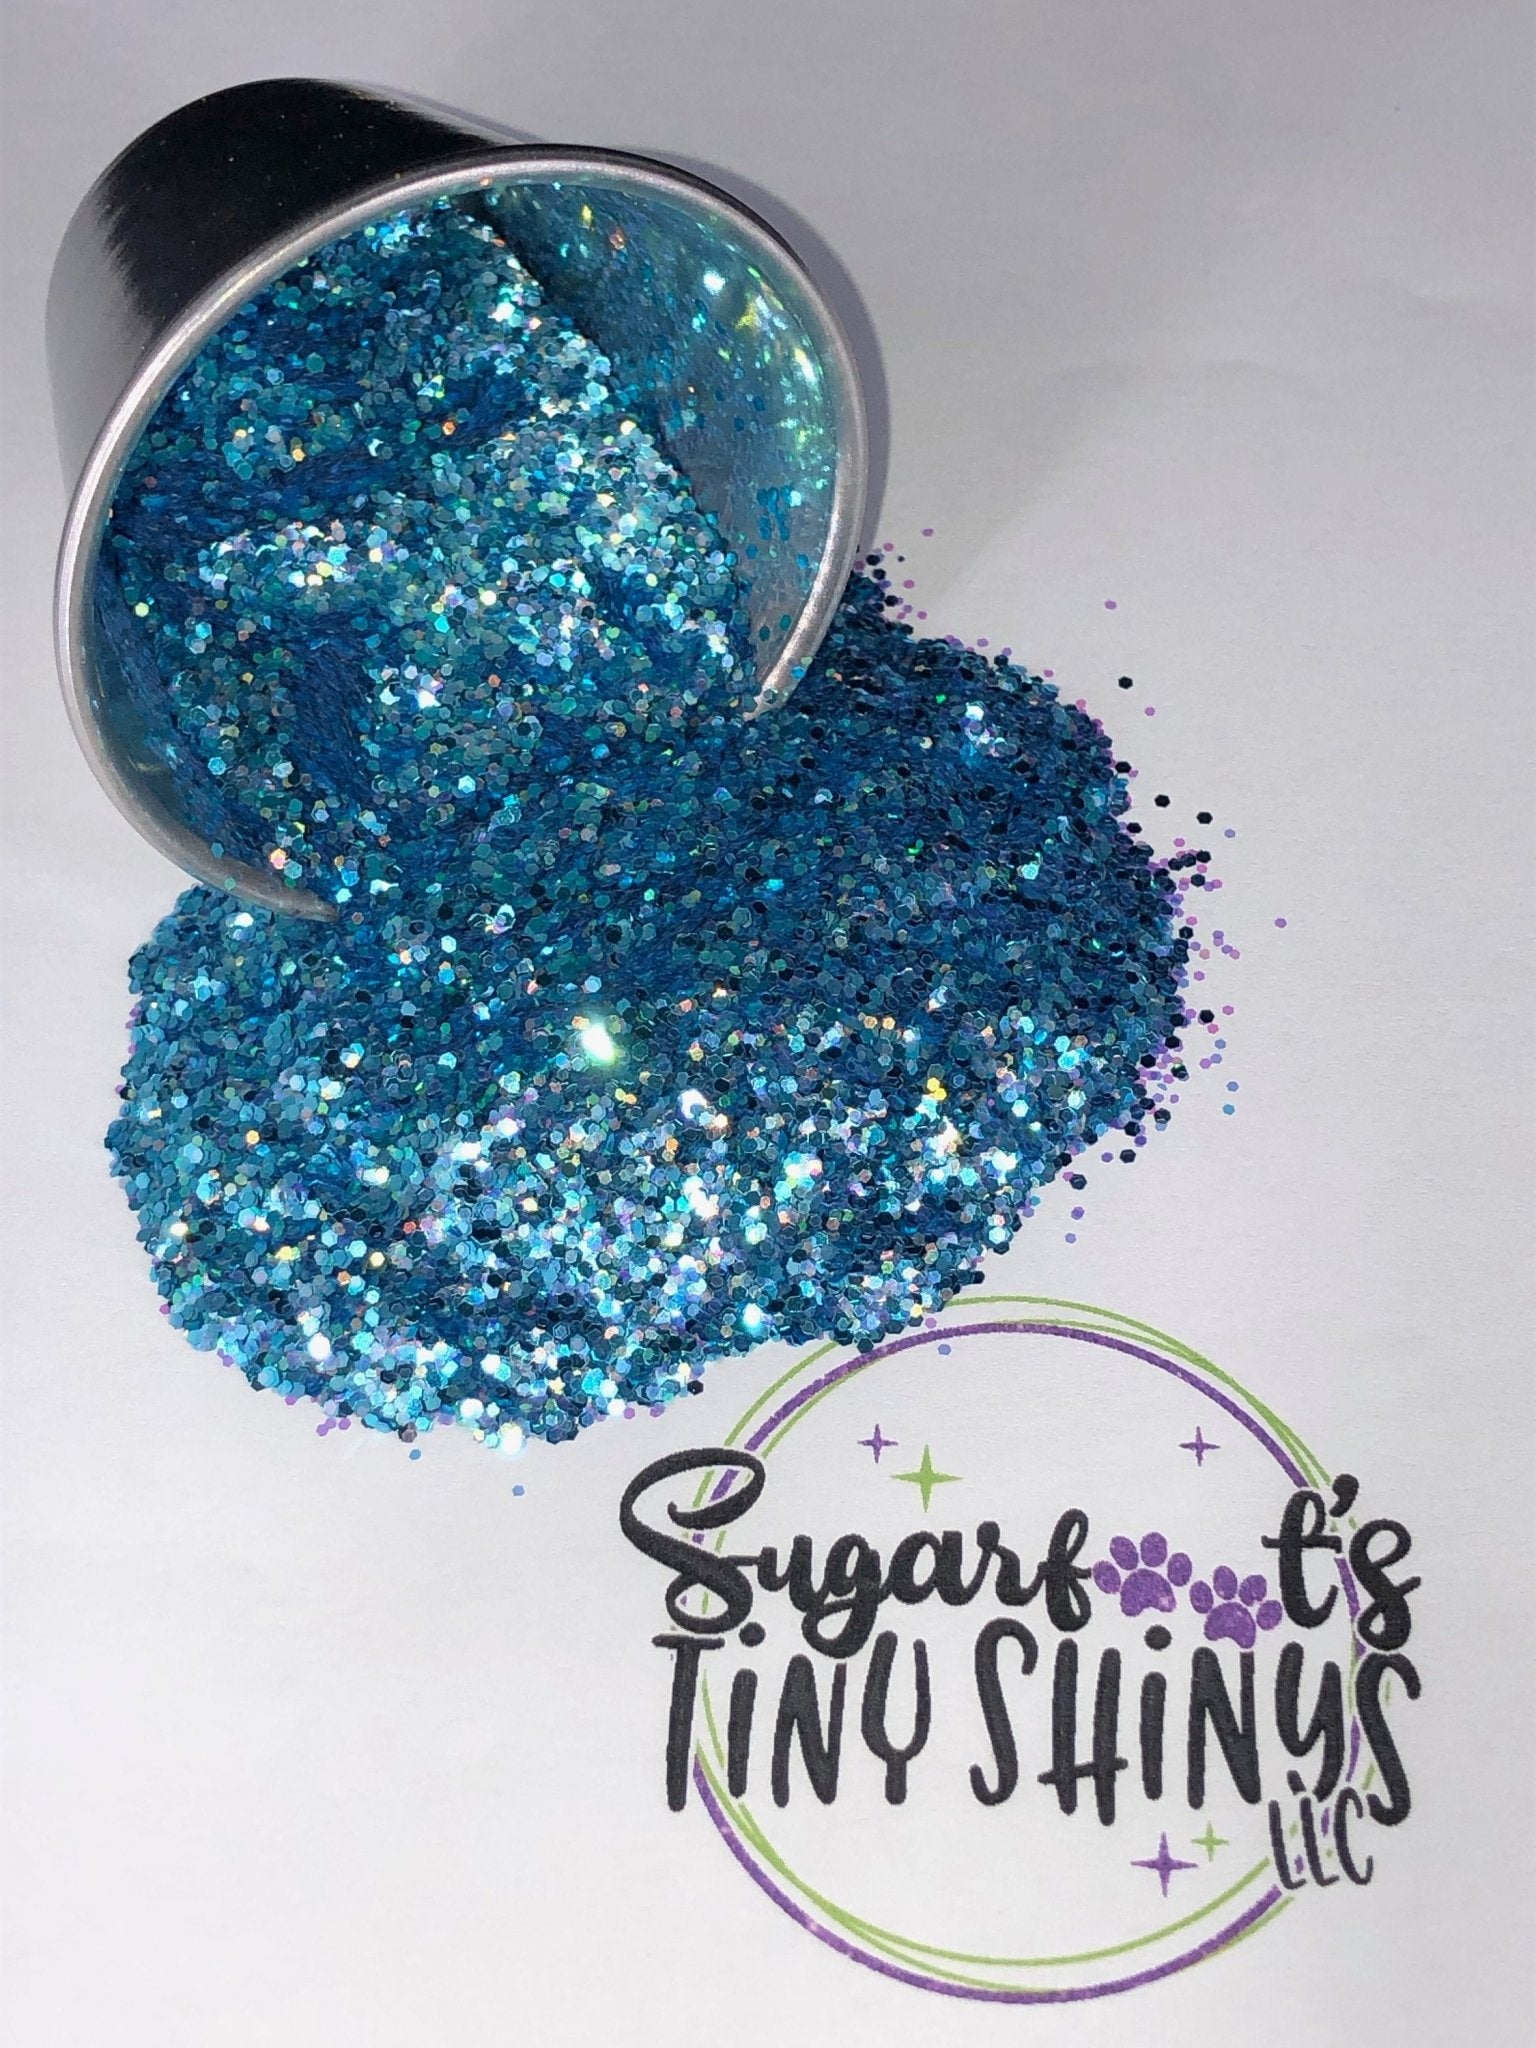 Blue Bay - Sugarfoot's Tiny Shinys, LLC